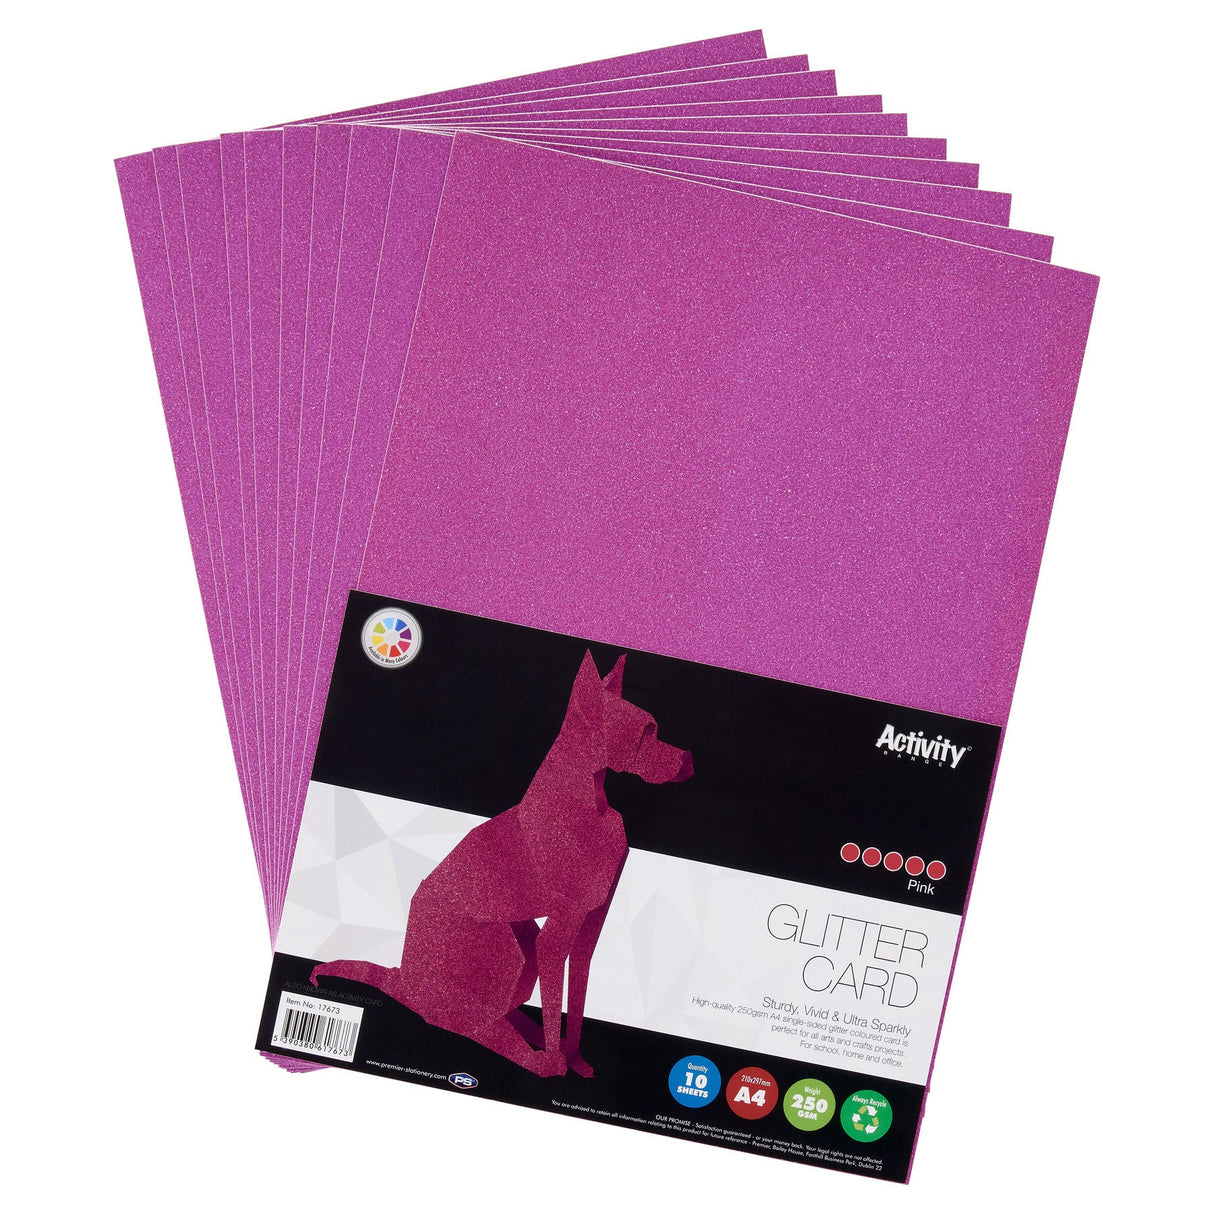 Premier Activity A4 Glitter Card - 250 gsm - Pink - 10 Sheets-Craft Paper & Card-Premier | Buy Online at Stationery Shop